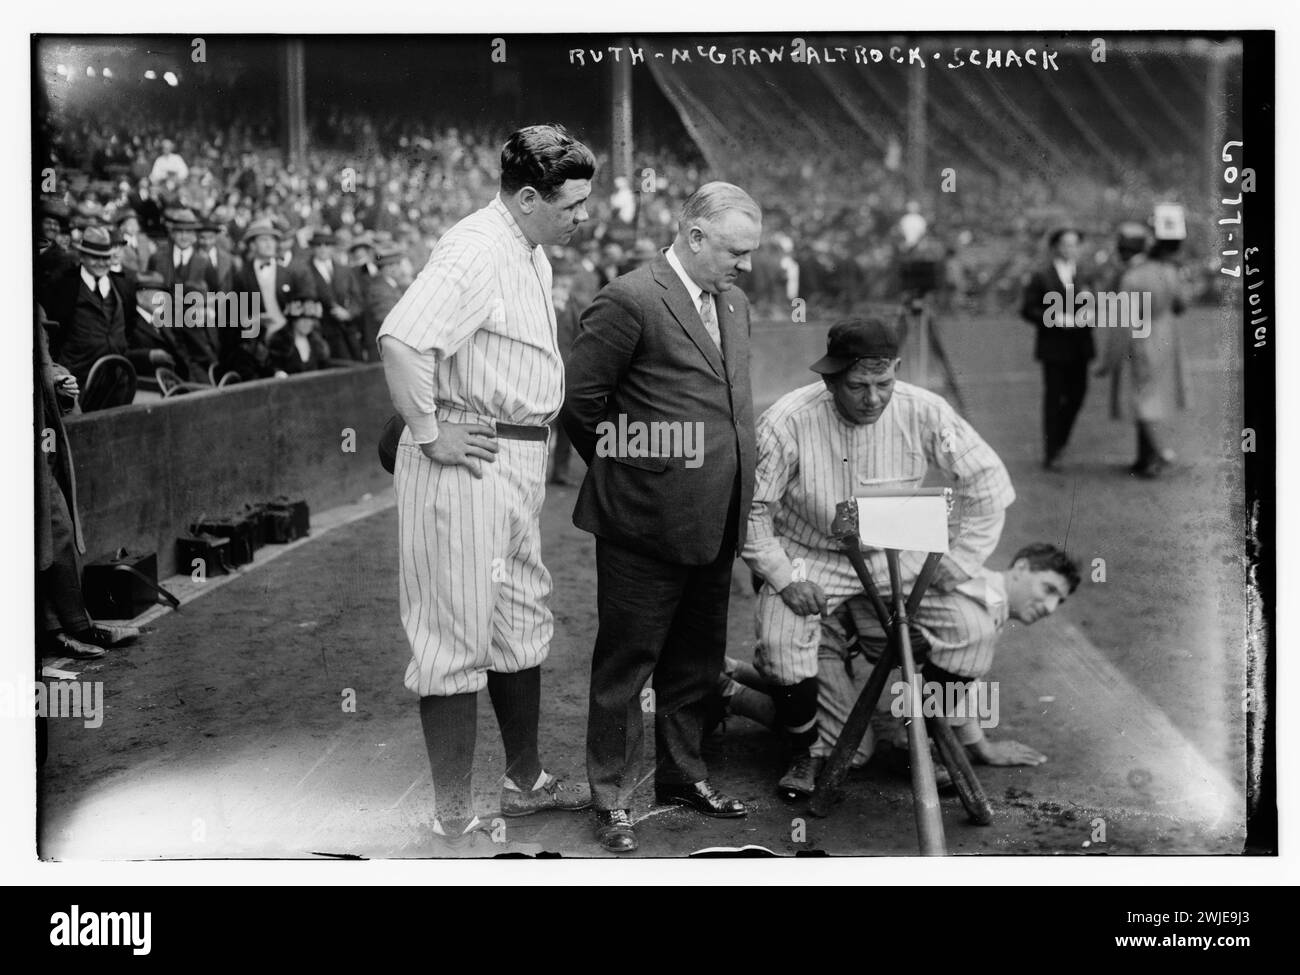 American Leauge - Babe Ruth, New York AL, John McGraw, Nick Altrock und Al Schack, Oktober 1923 Stockfoto